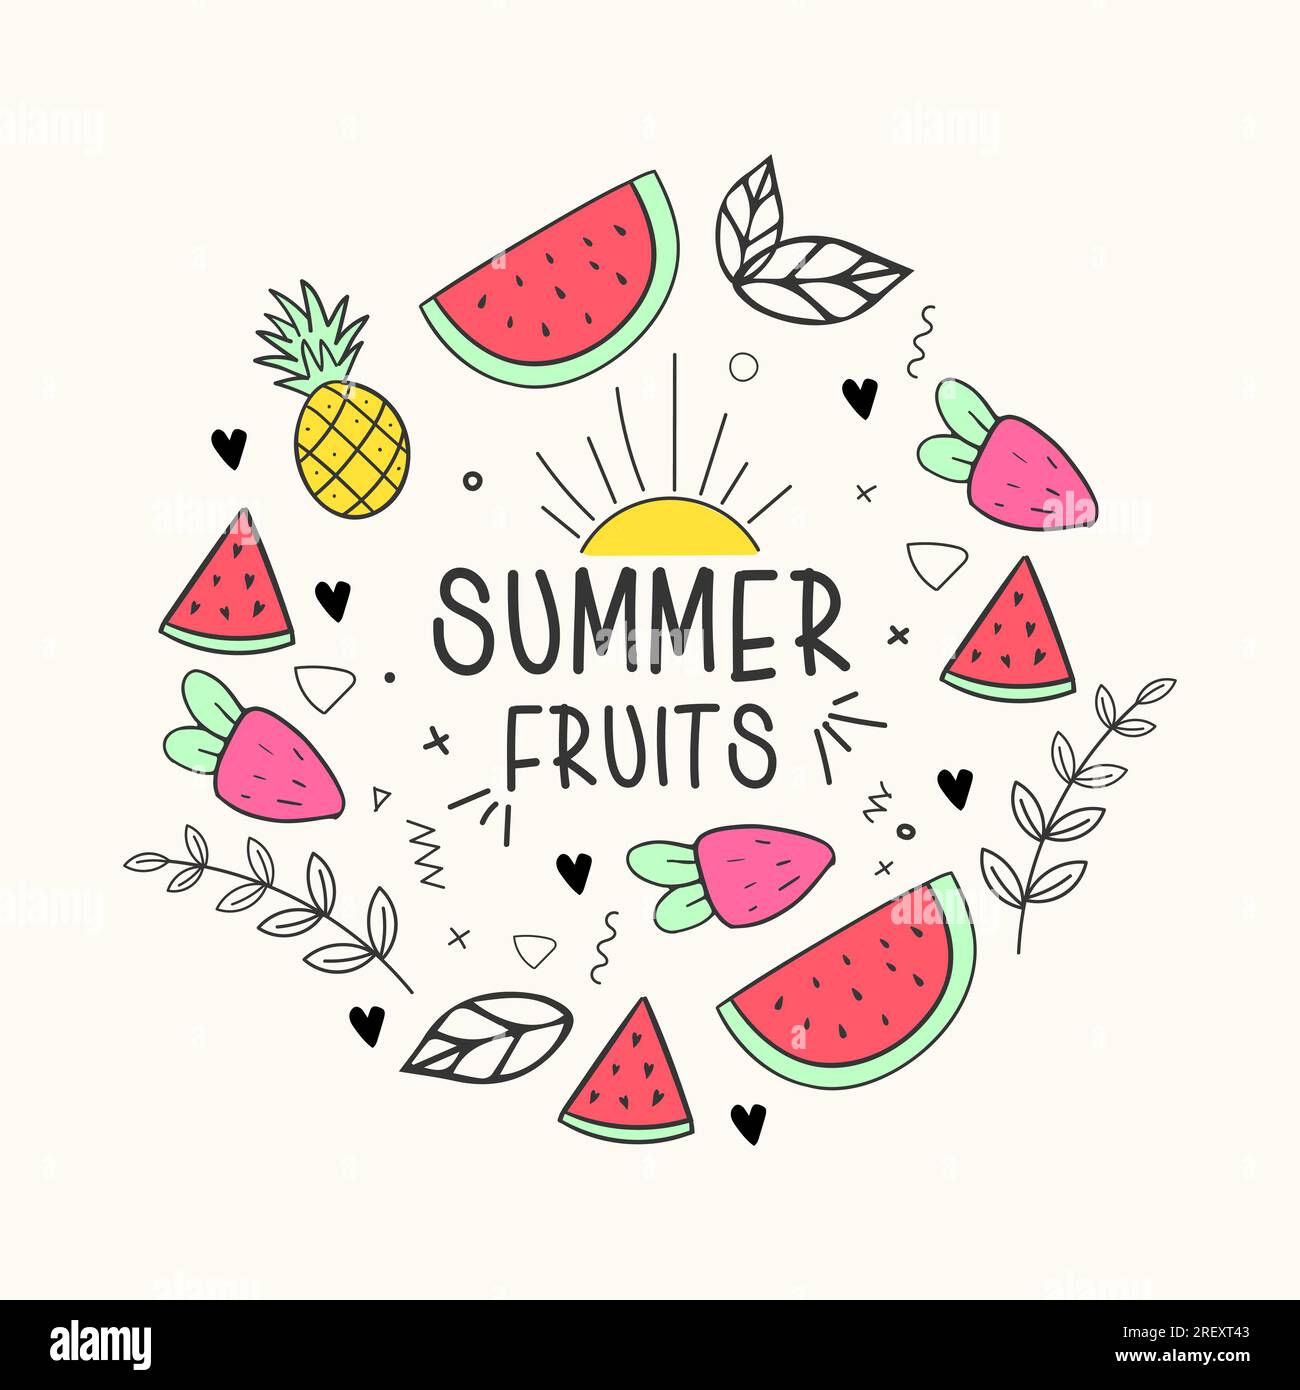 Fruits vector illustration with watermelon banana lemon and orange Stock Vector